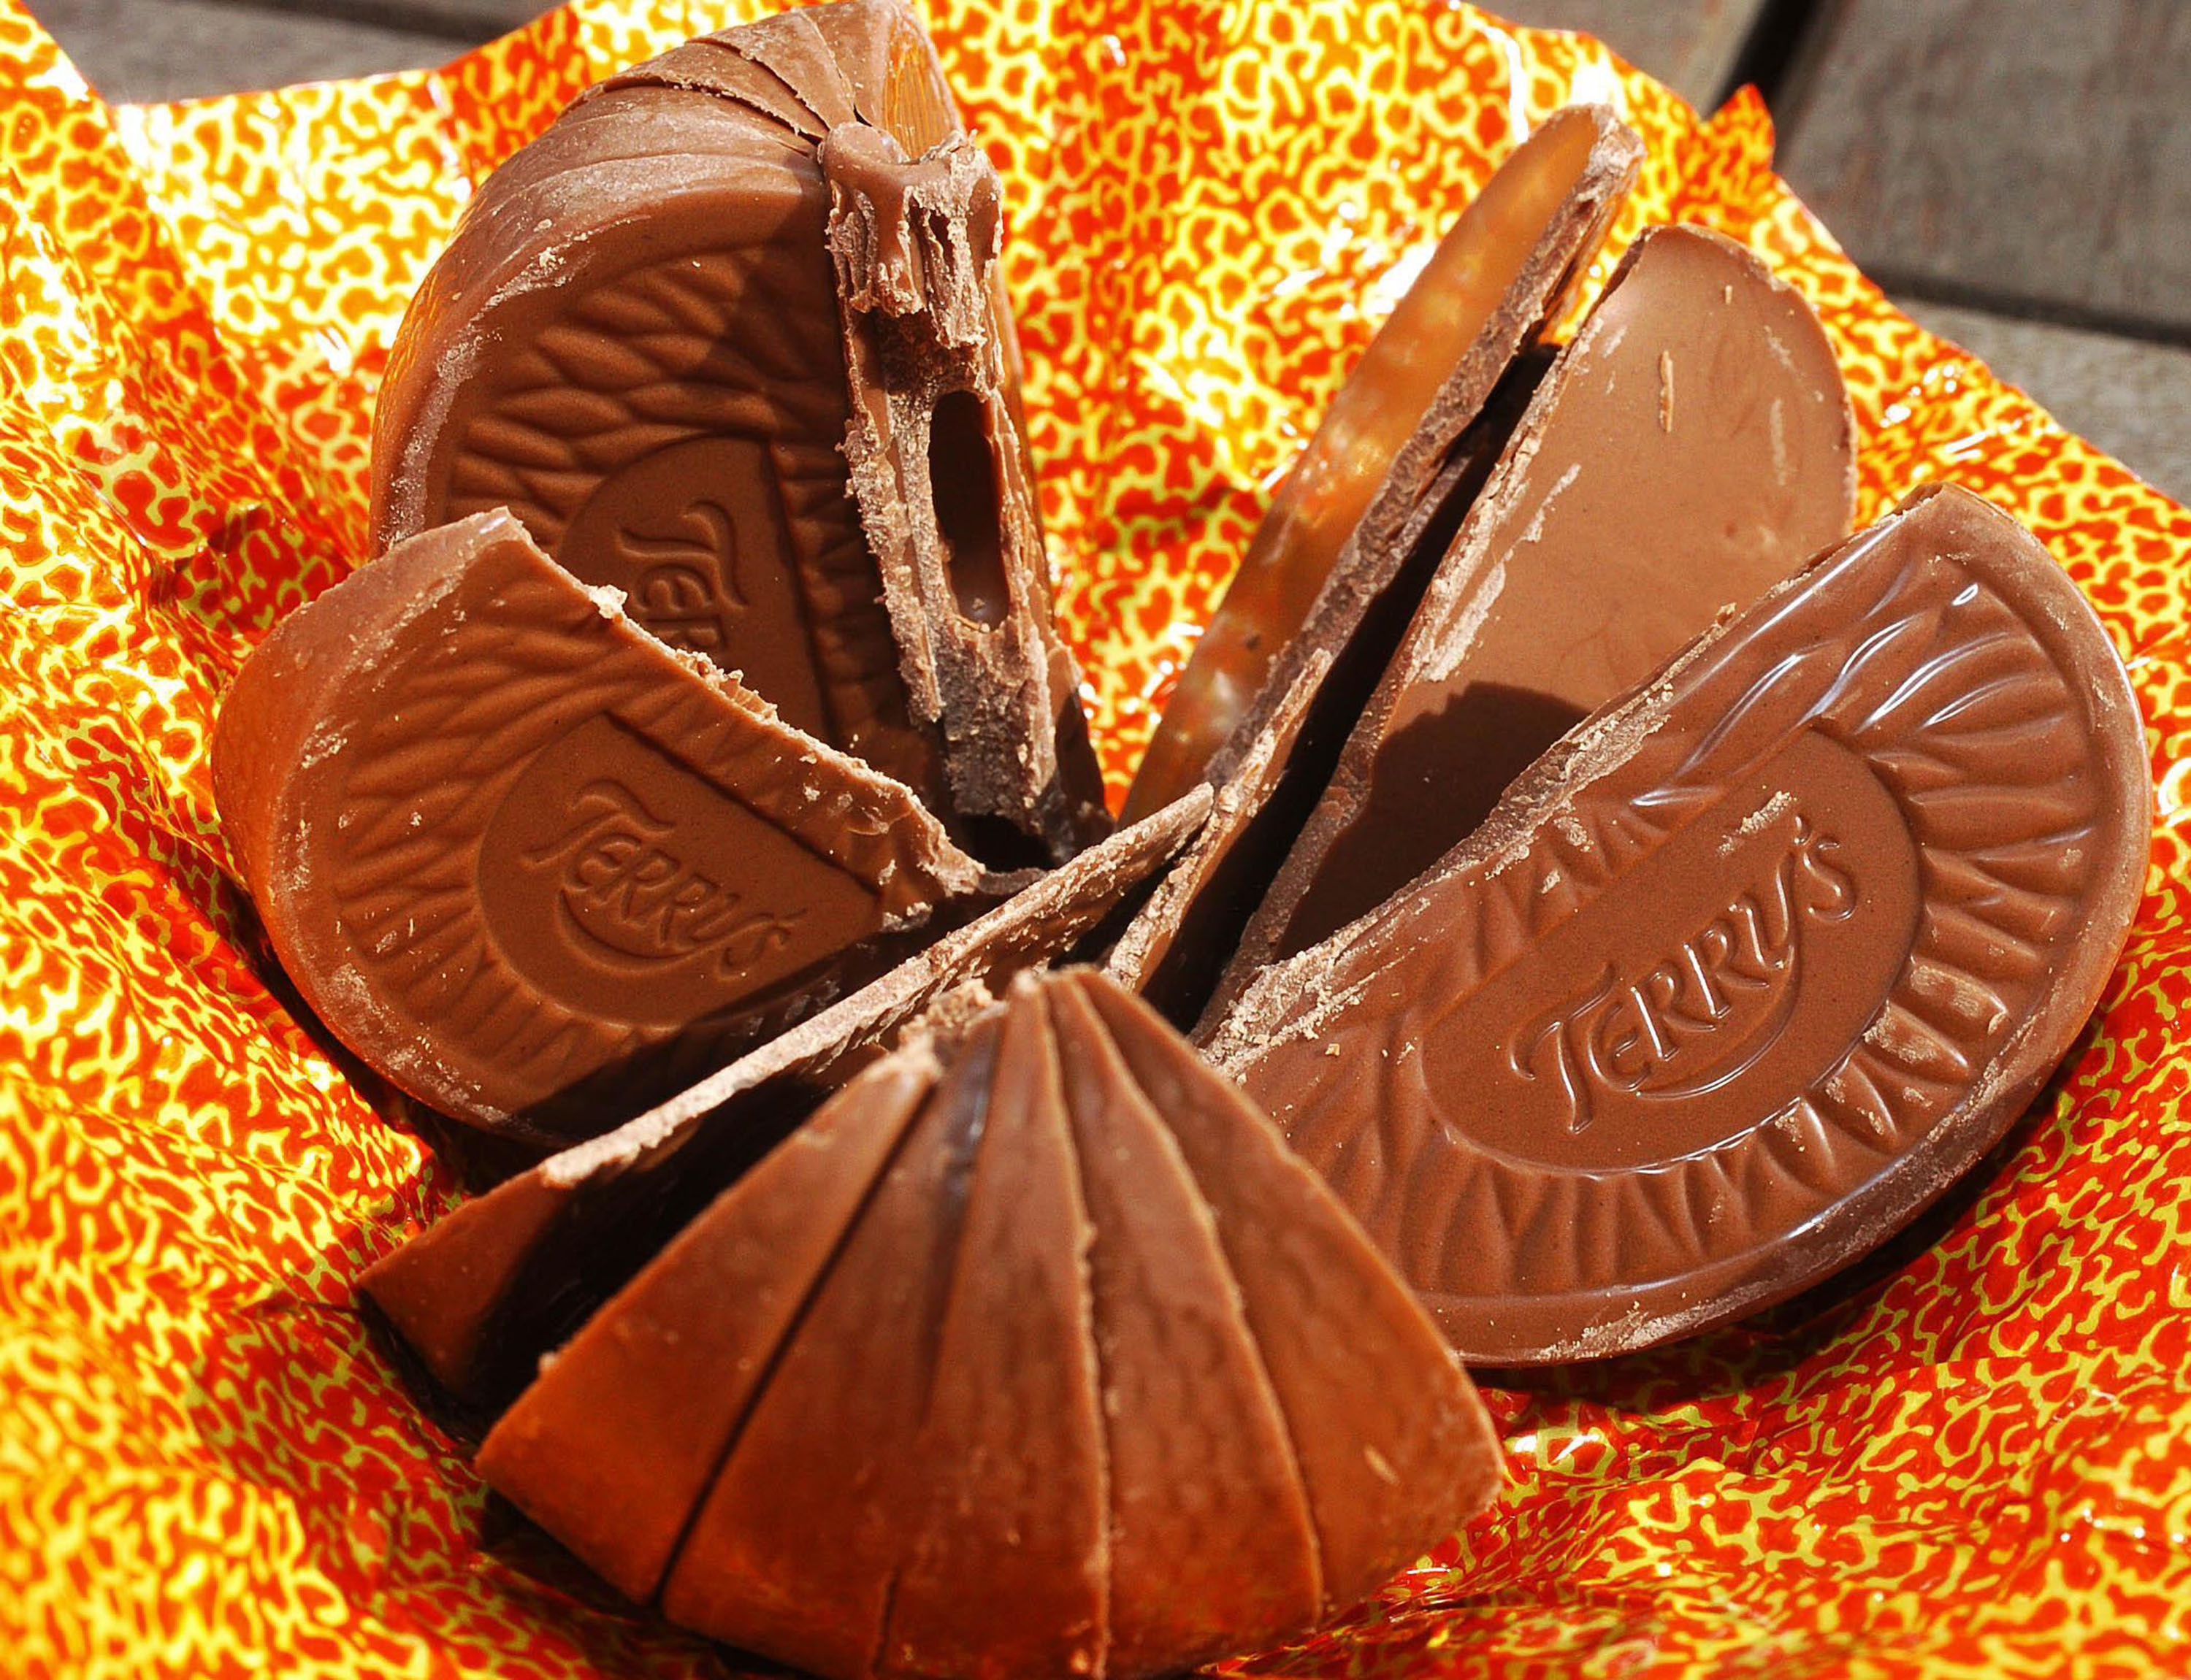 Шоколад п. Шоколад Terry's Chocolate Orange. Шоколадные дольки. Долька шоколада. Шоколад в форме апельсина.